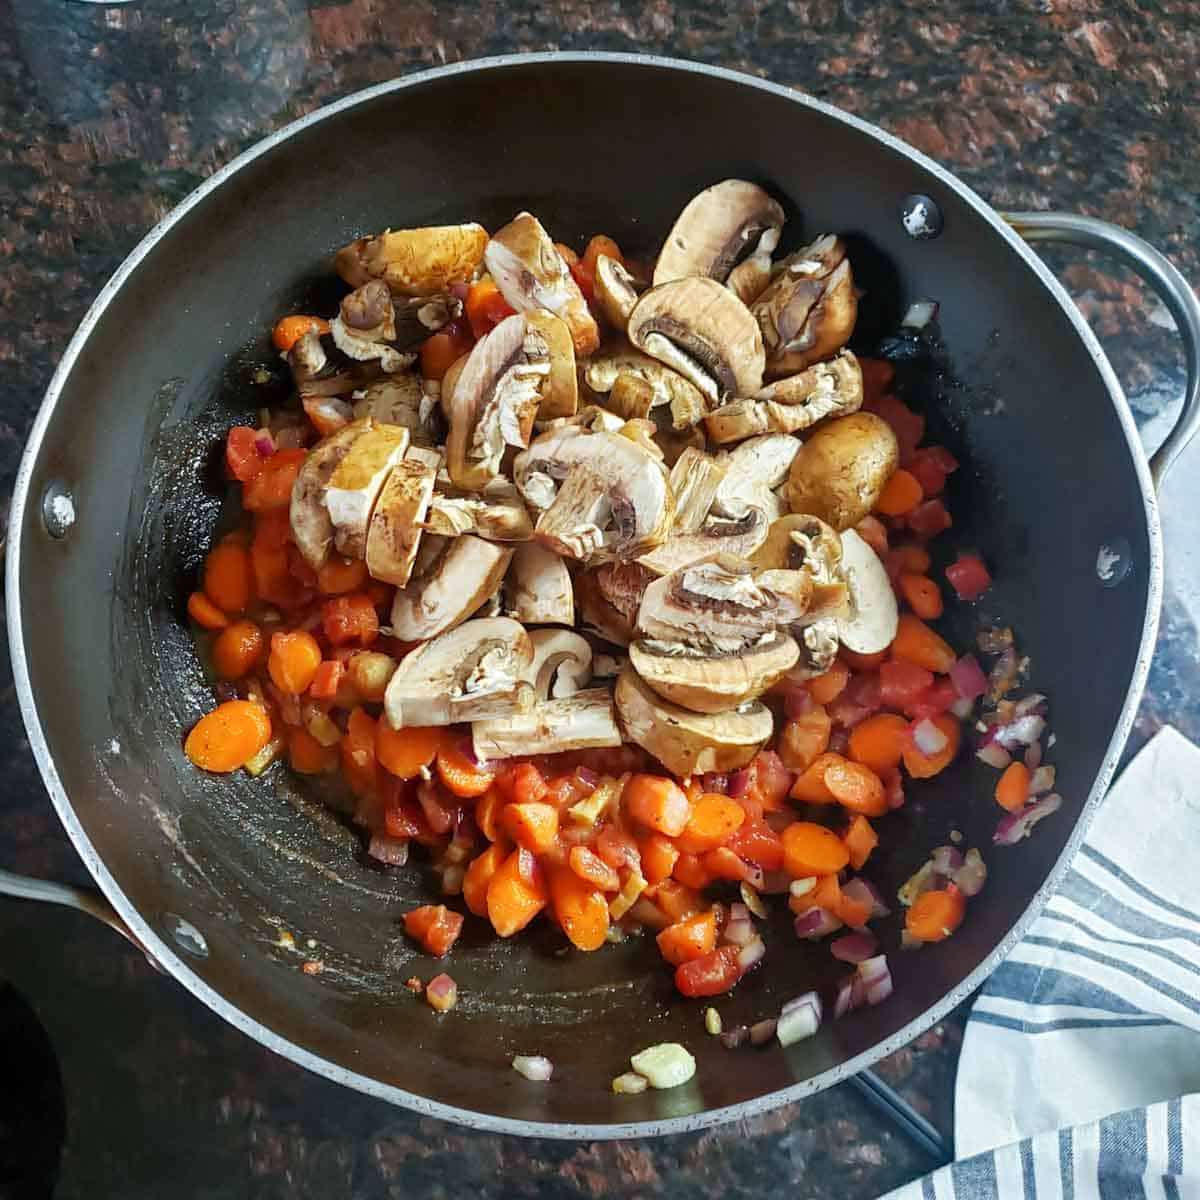 Step 4 of adding mushrooms and sautéing. 